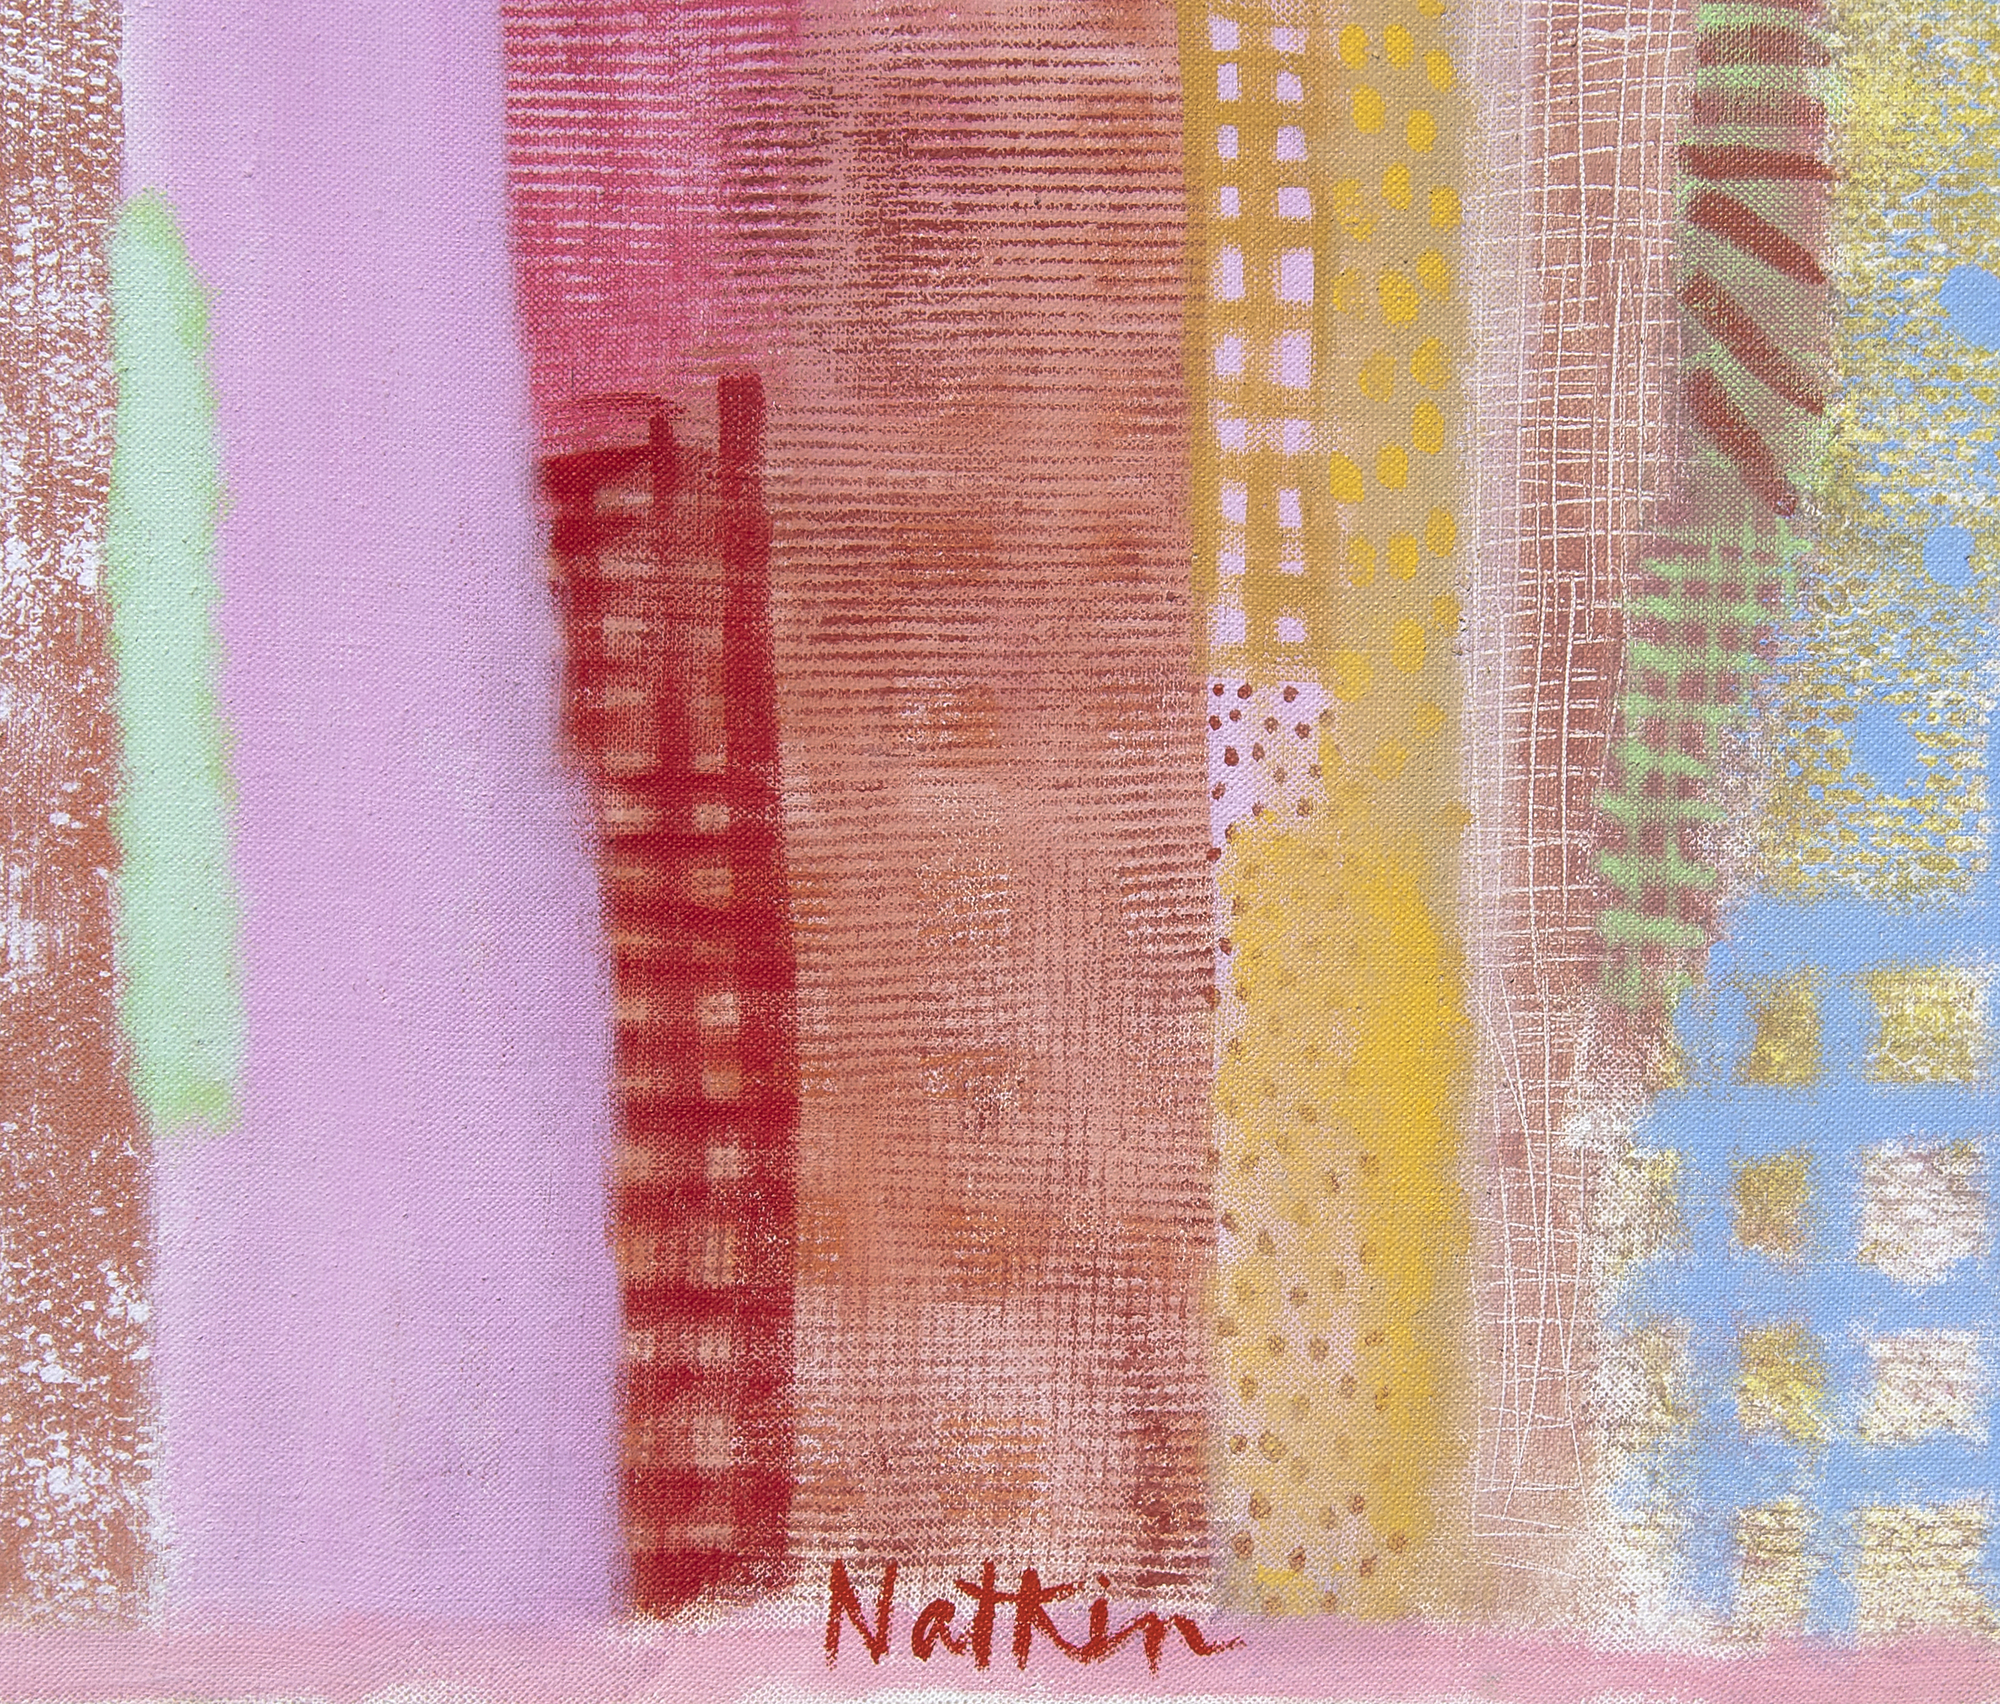 ROBERT NATKIN - Apollo XL - acrylic on canvas - 88 x 116 1/4 in.